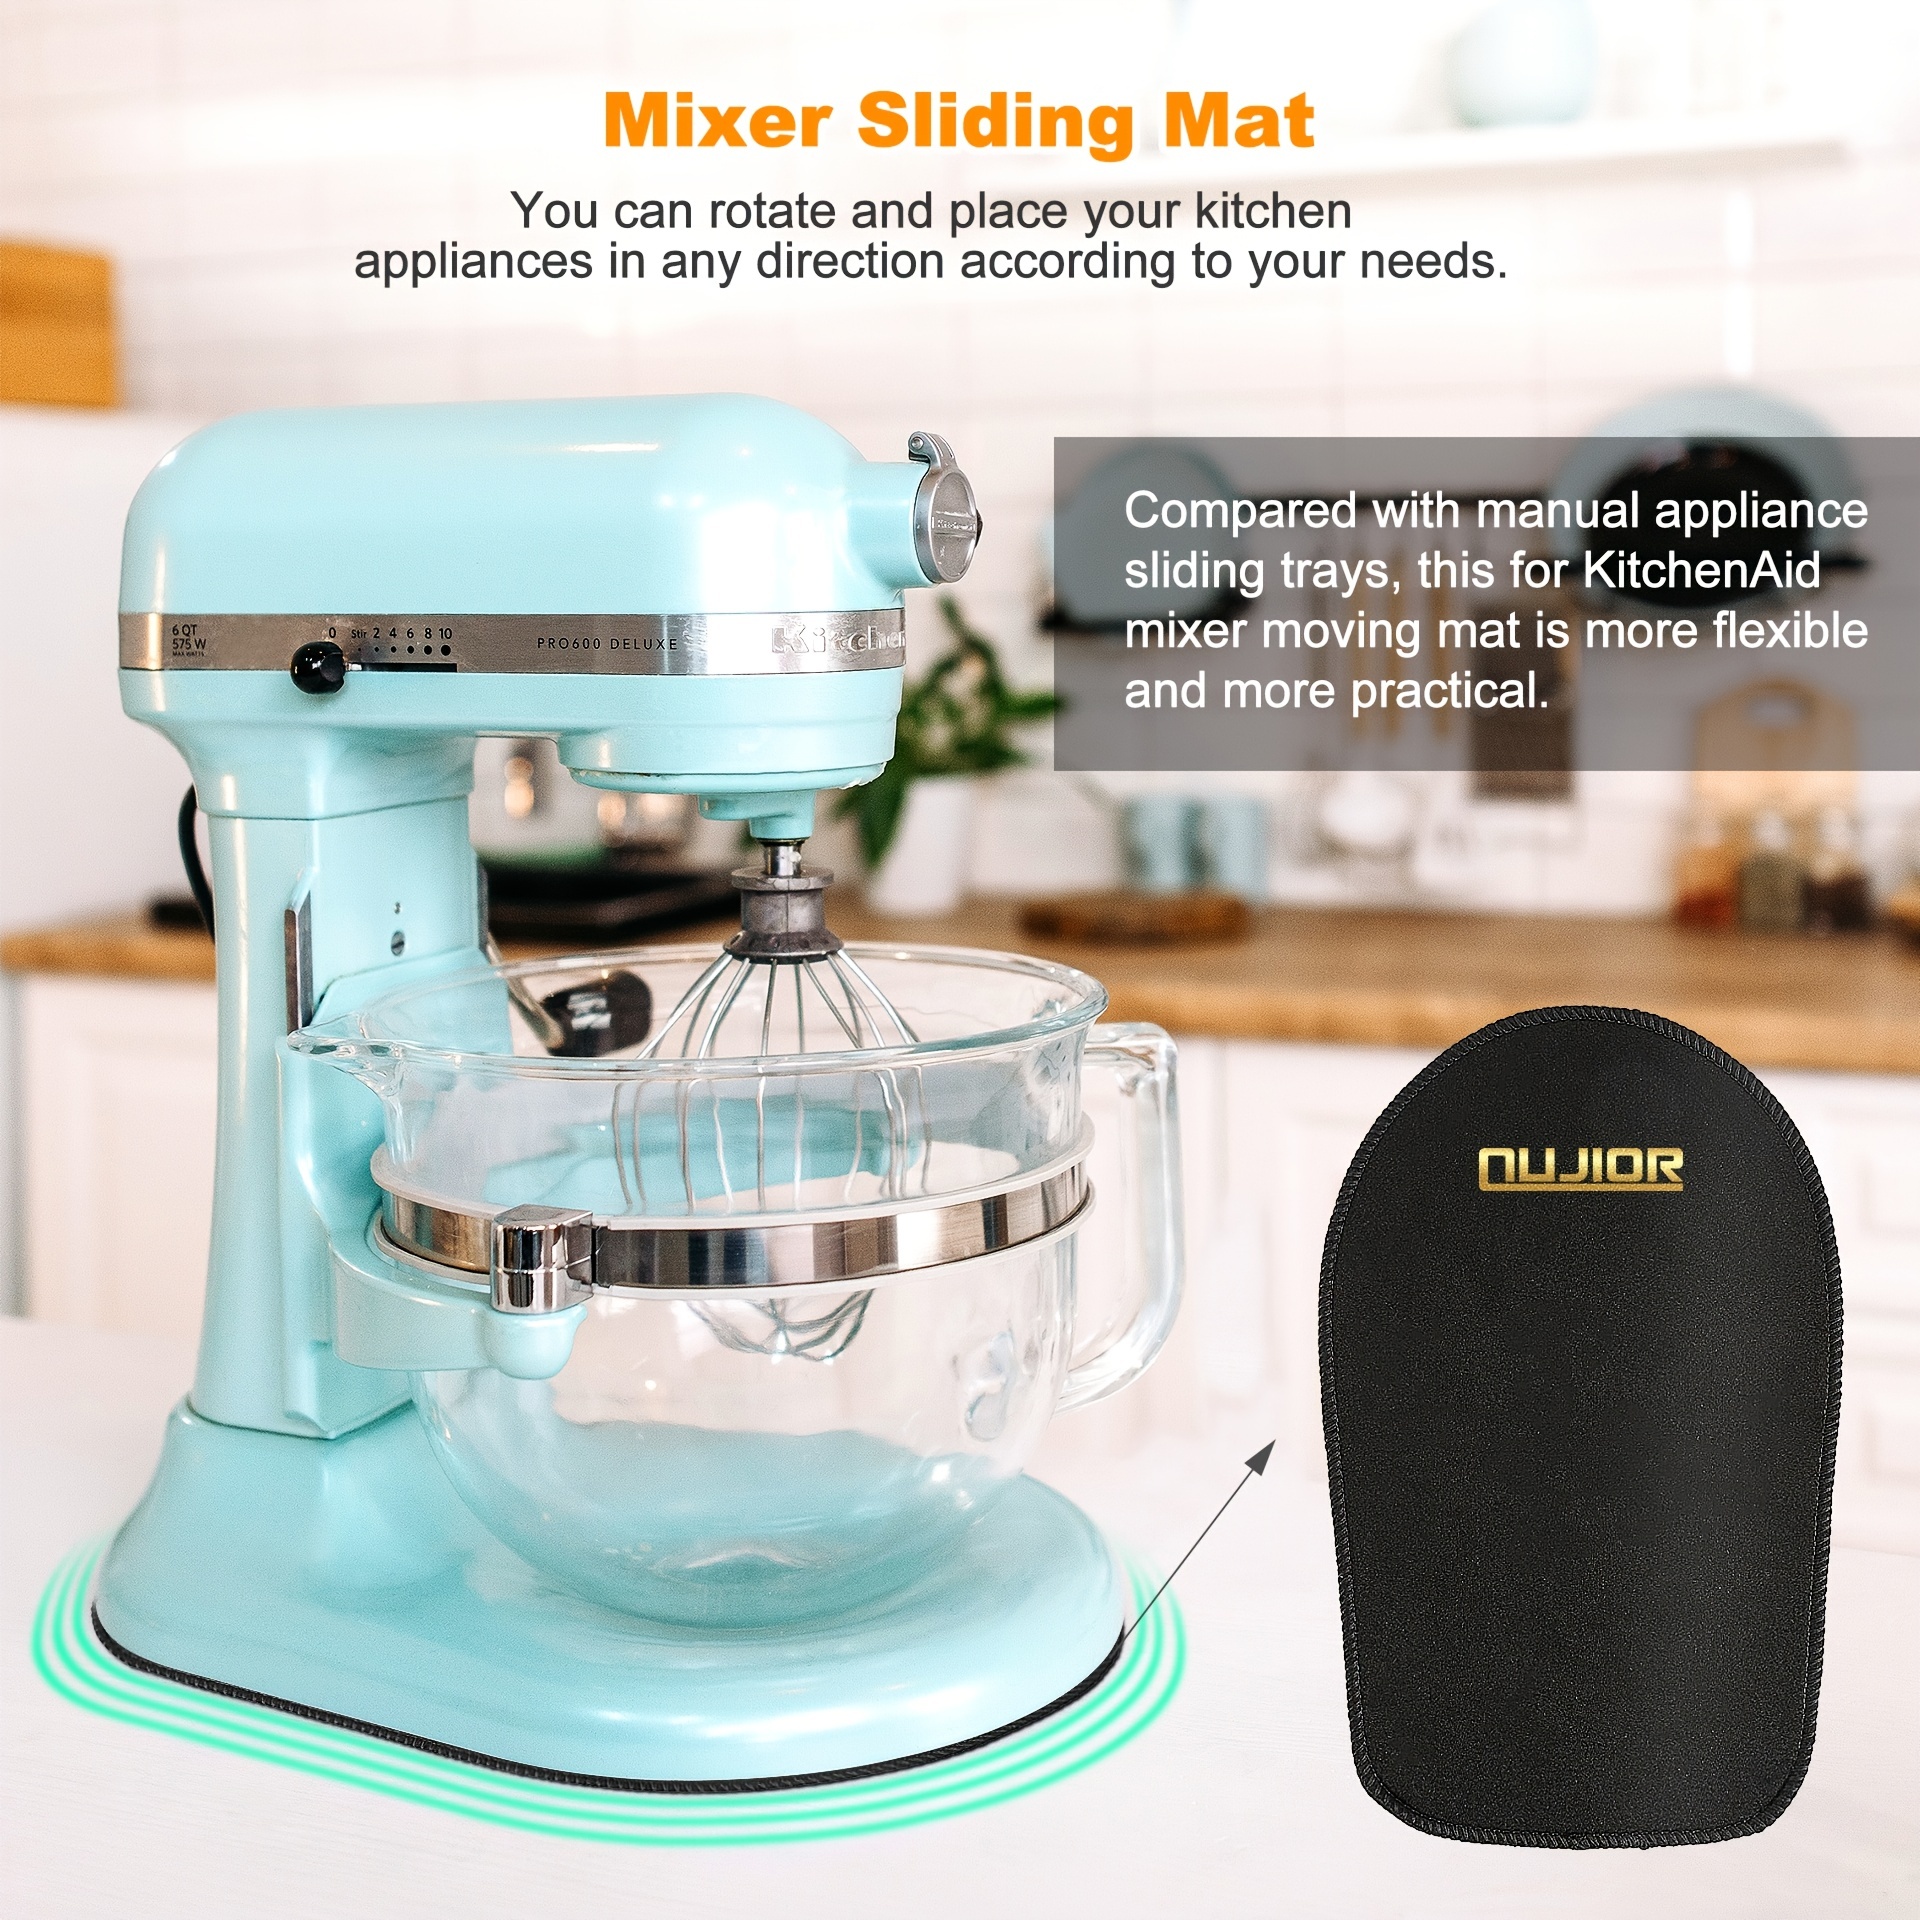  Mixer Slider Mat for Kitchen Aid Bowl Lift 4.5-5 Qt